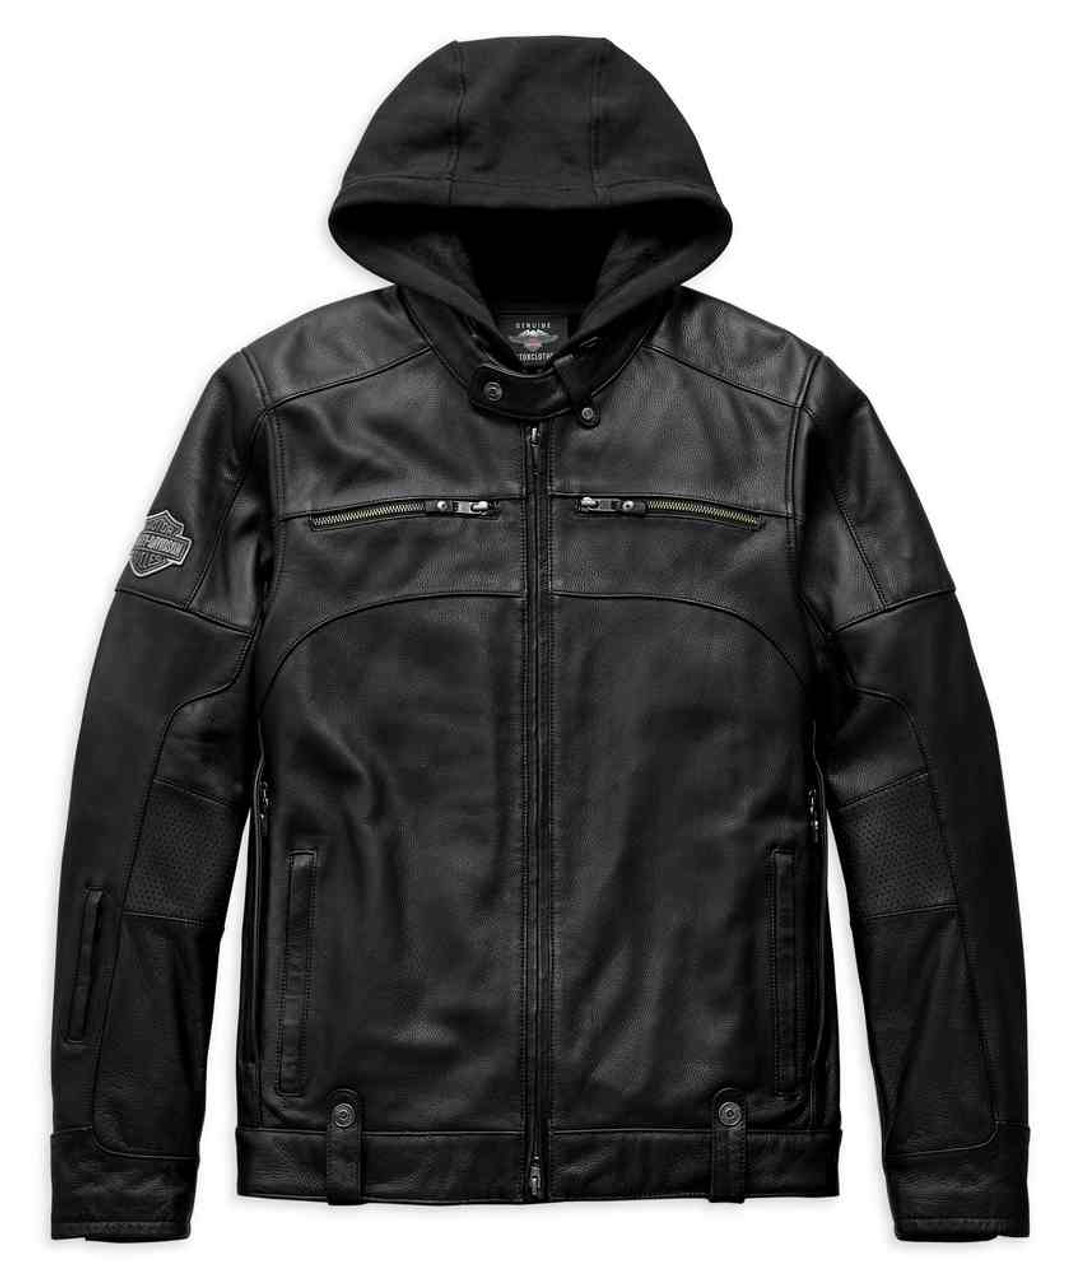  Harley Davidson Leather Jacket